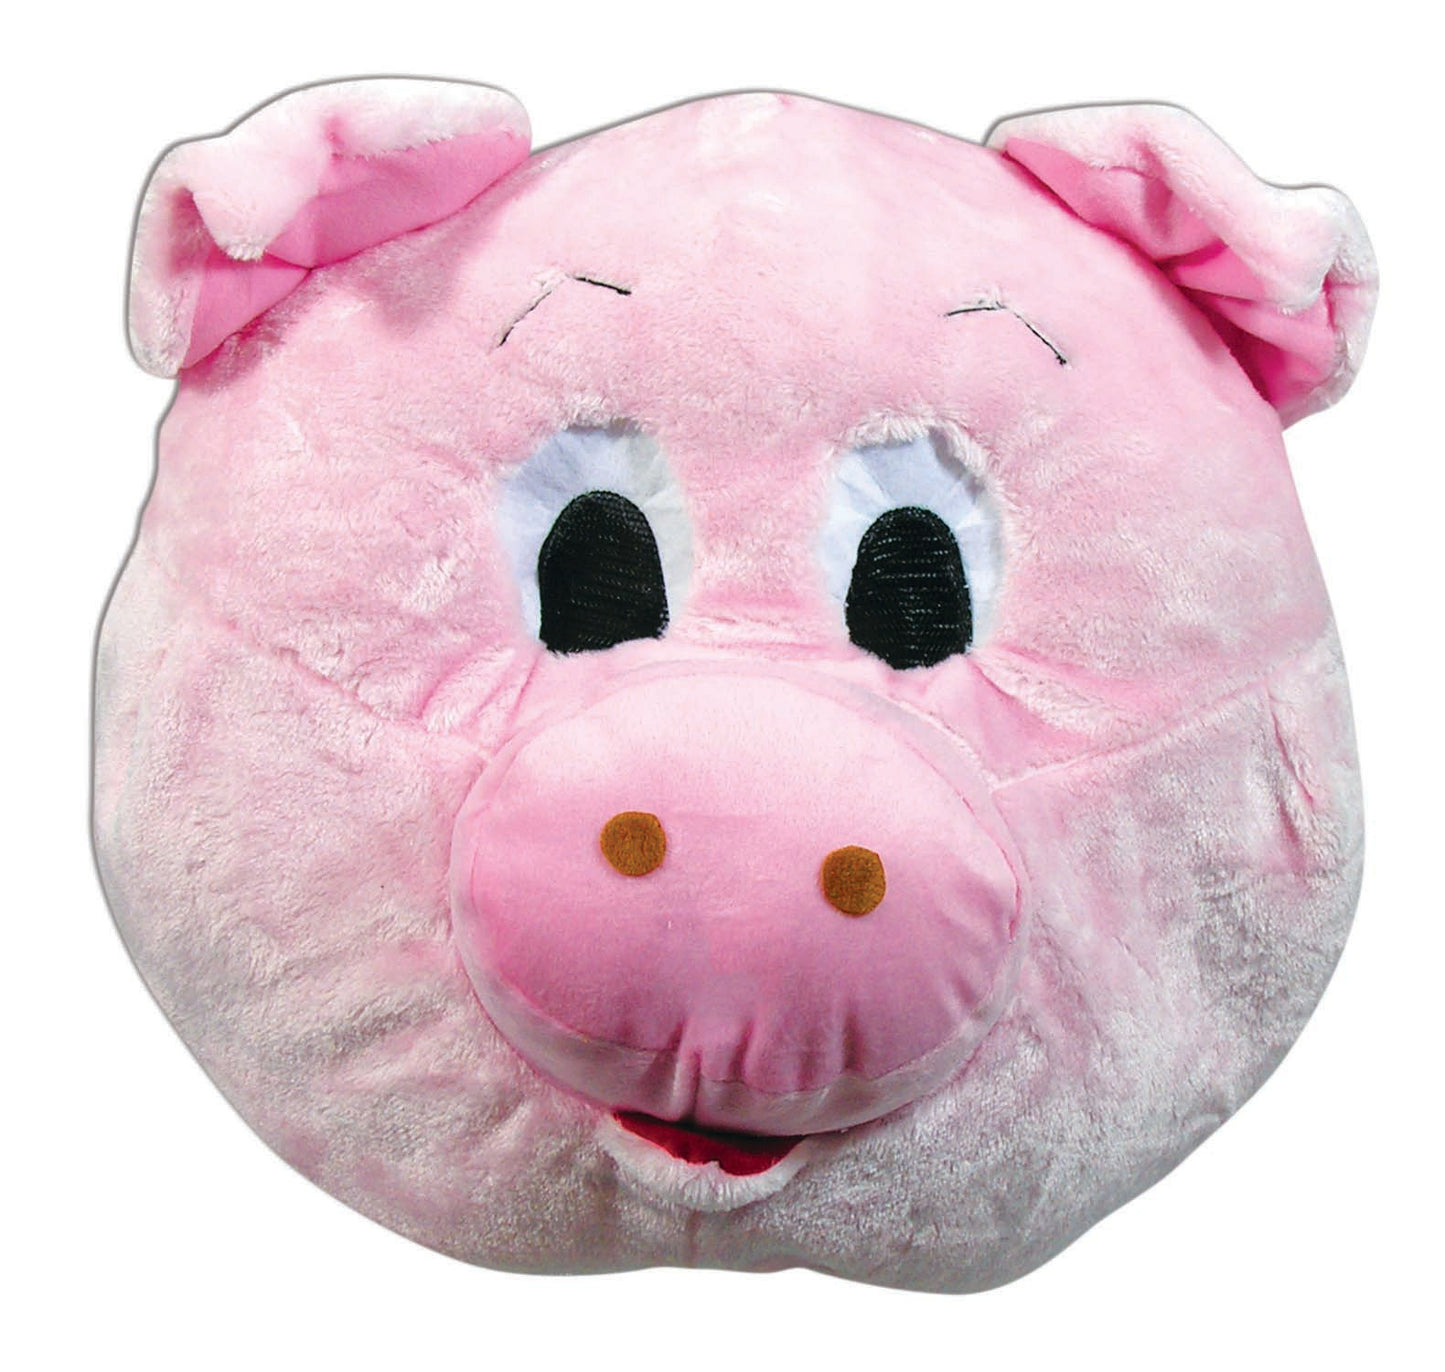 Plush Animal Mascot Head: Pig